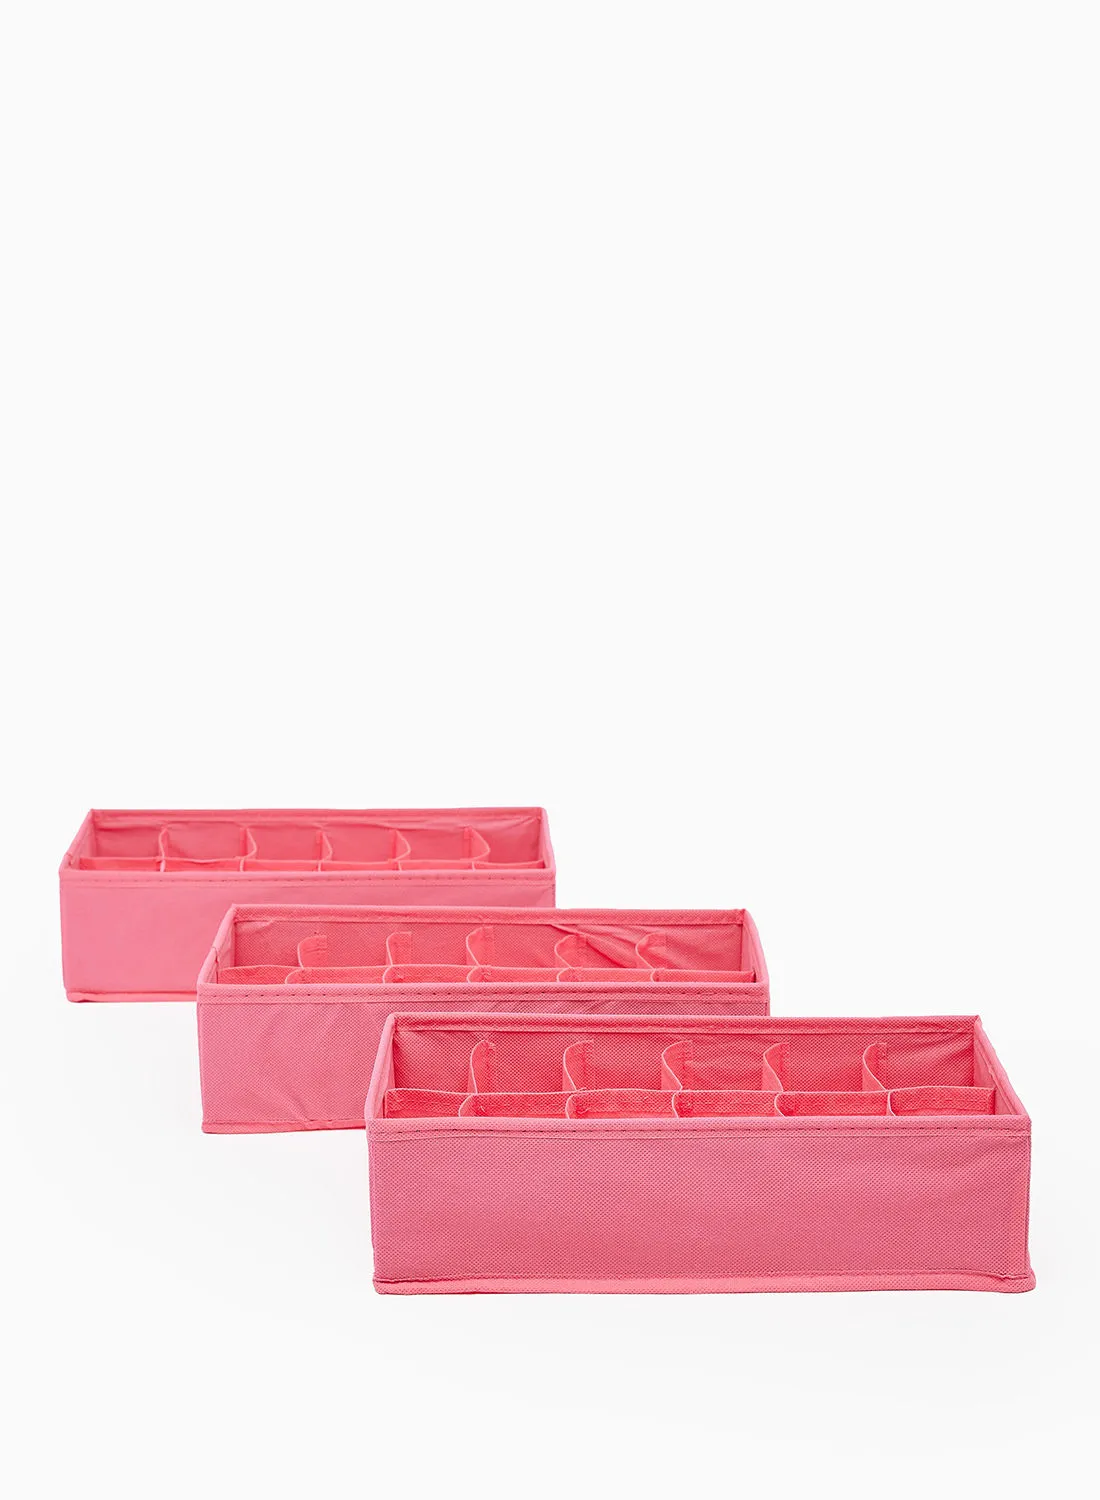 Amal 12 Compartment Divider 3 Pack Foldable Storage Organizer Basics Bra And Undergarment Dresser Organizers Rose Red 33X9X17cm